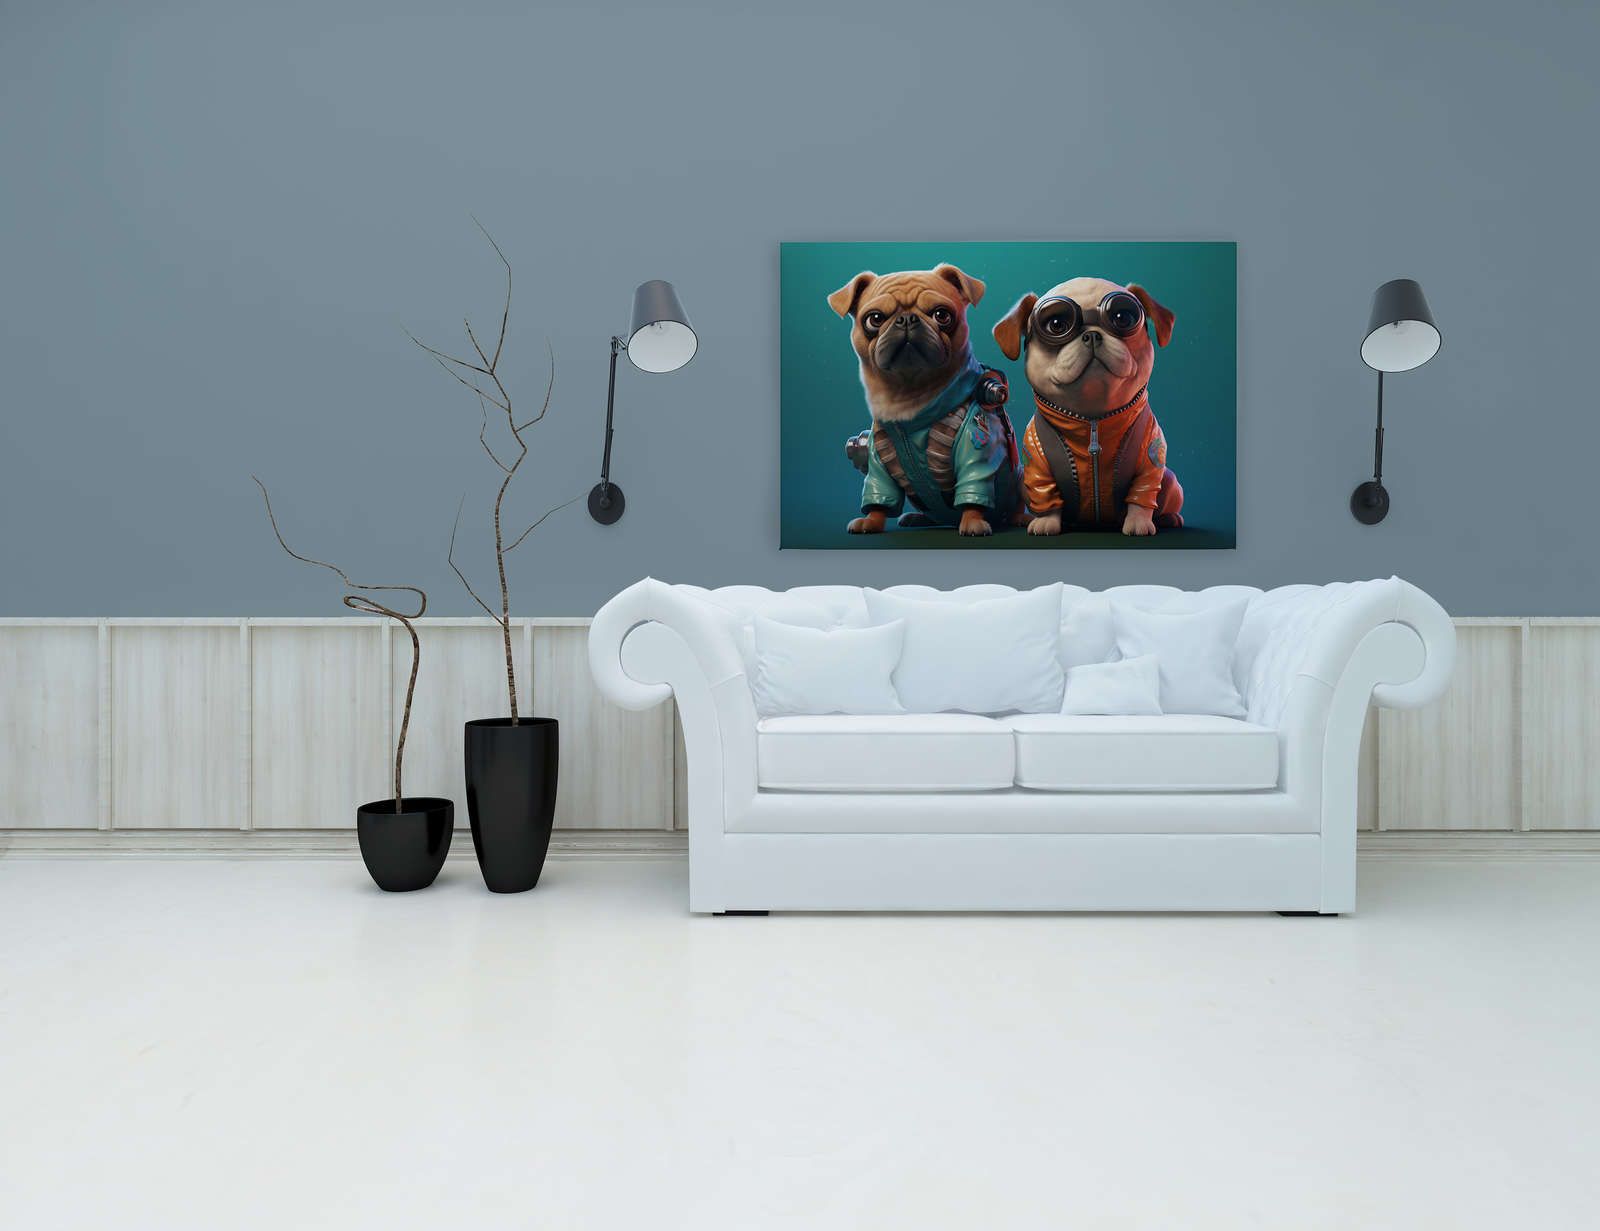             KI Canvas painting »Cute Dogs« - 120 cm x 80 cm
        